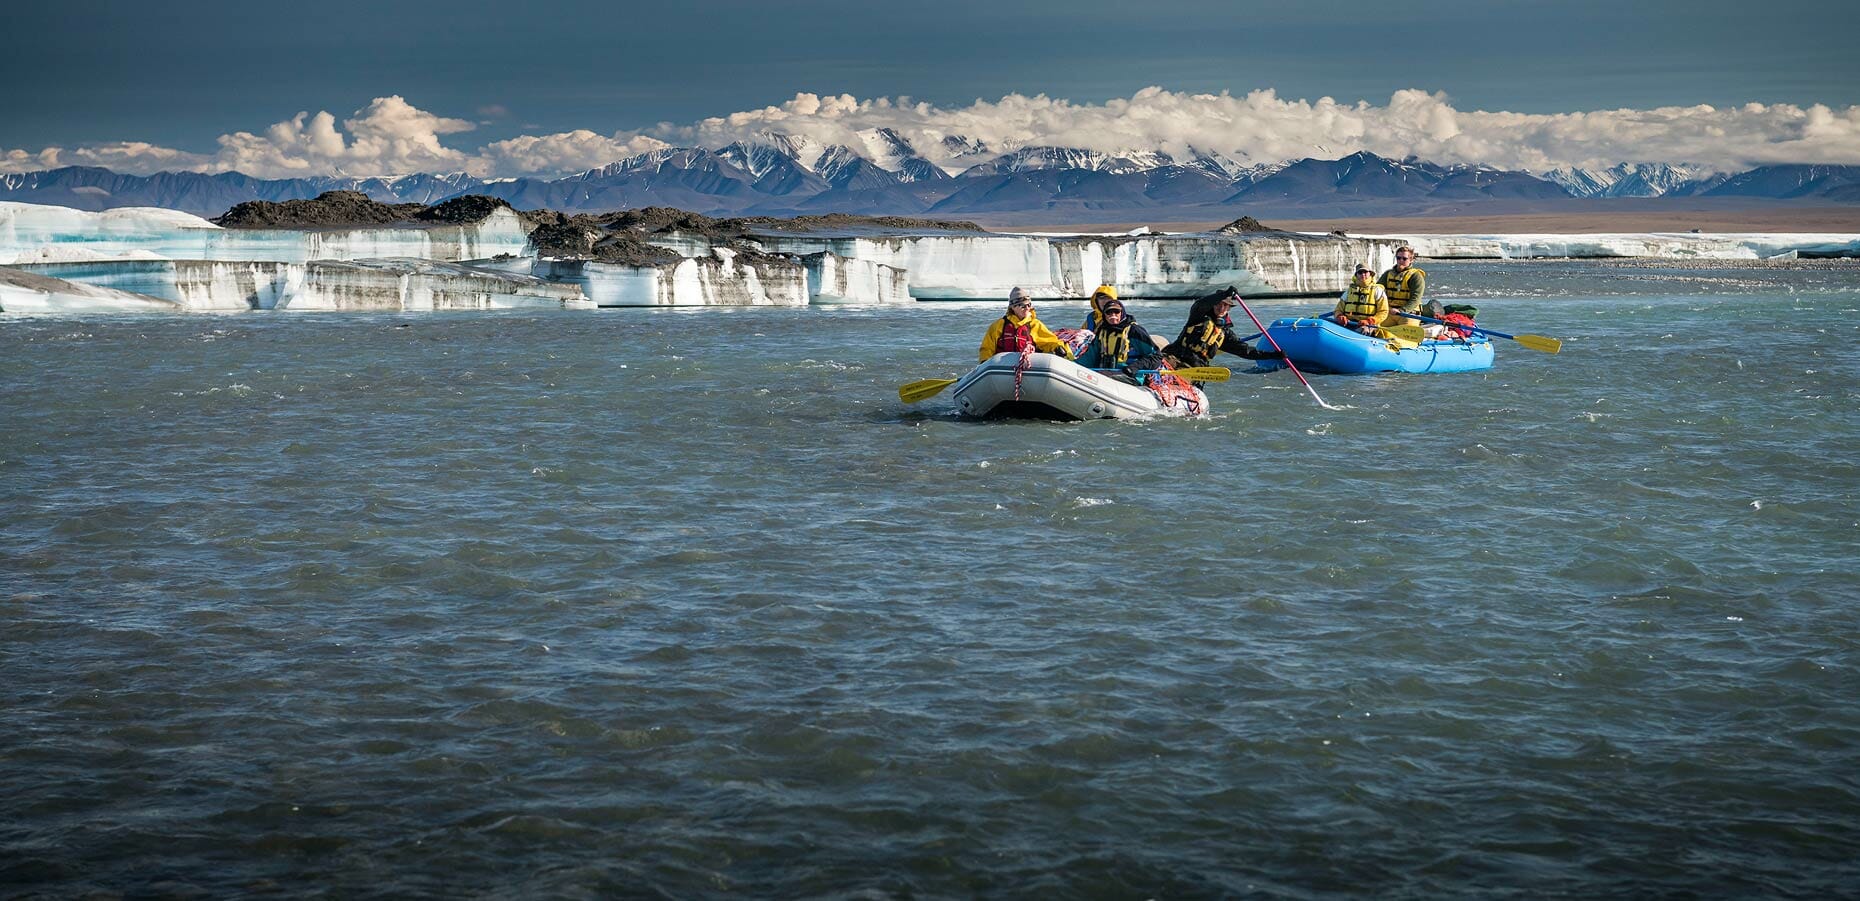 Rafting near the ice in the Arctic National Wildlife Refuge Alaska. Chris Miller Photo